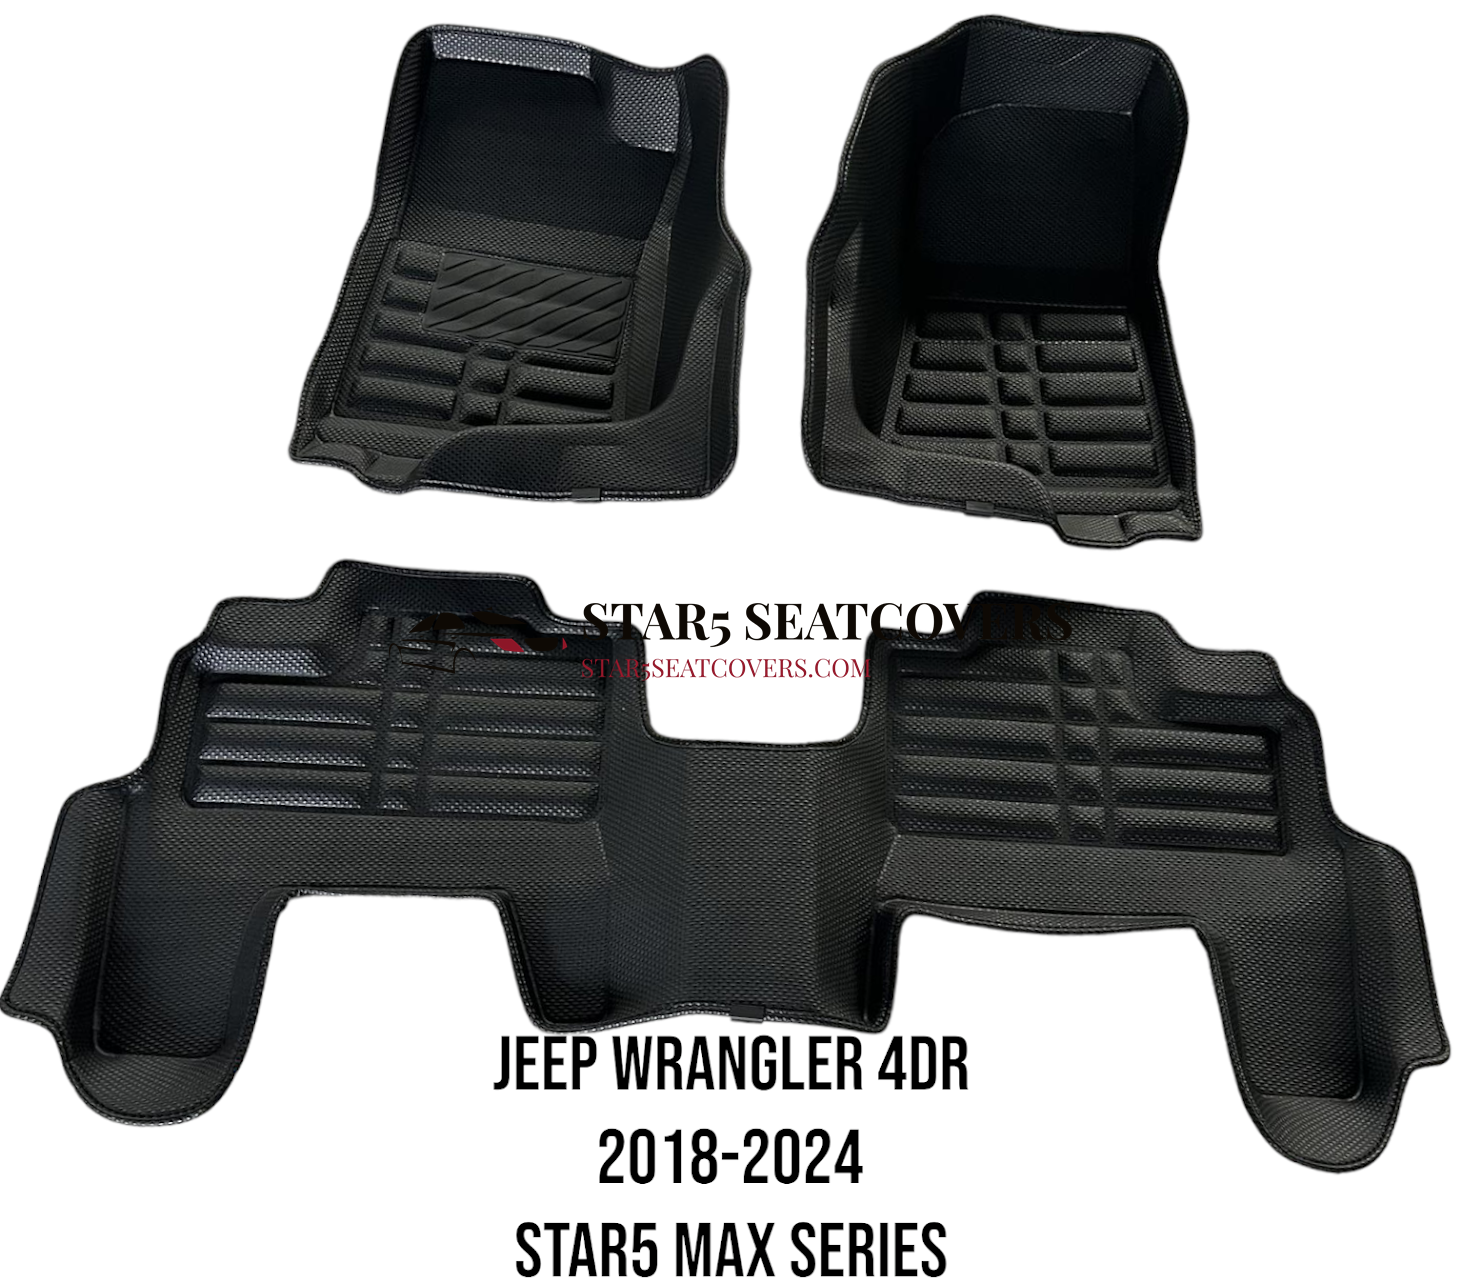 STAR5 MAX Series 18 - 24 Jeep Wrangler 4Dr Floor Mats